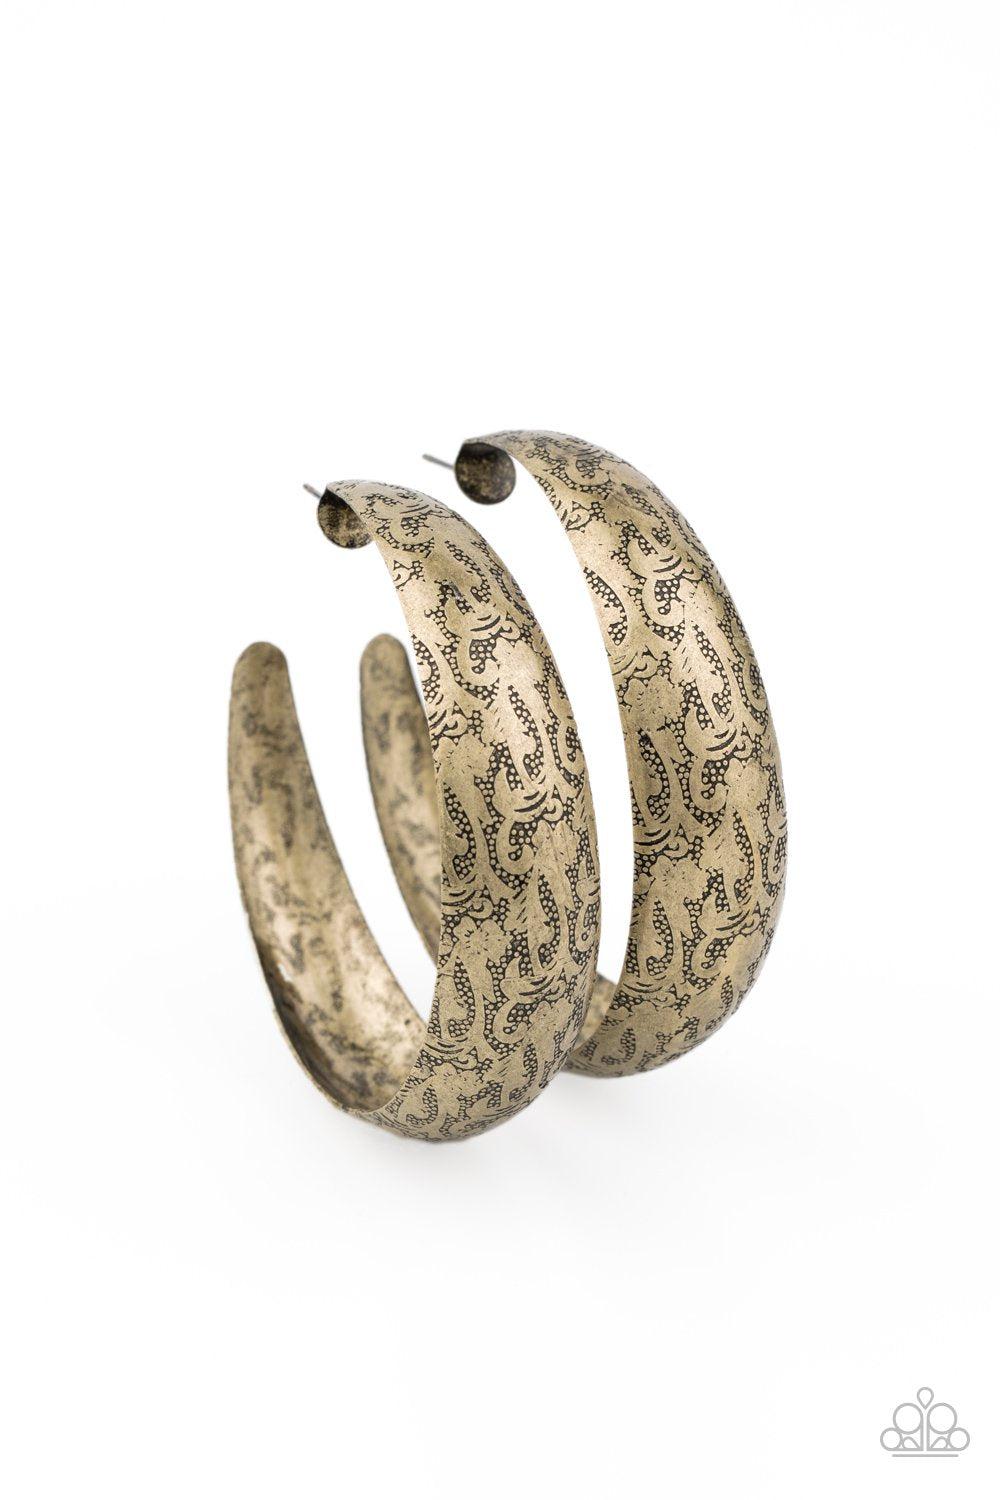 Sahara Sandstorm Brass Hoop Earrings - Paparazzi Accessories - lightbox -CarasShop.com - $5 Jewelry by Cara Jewels